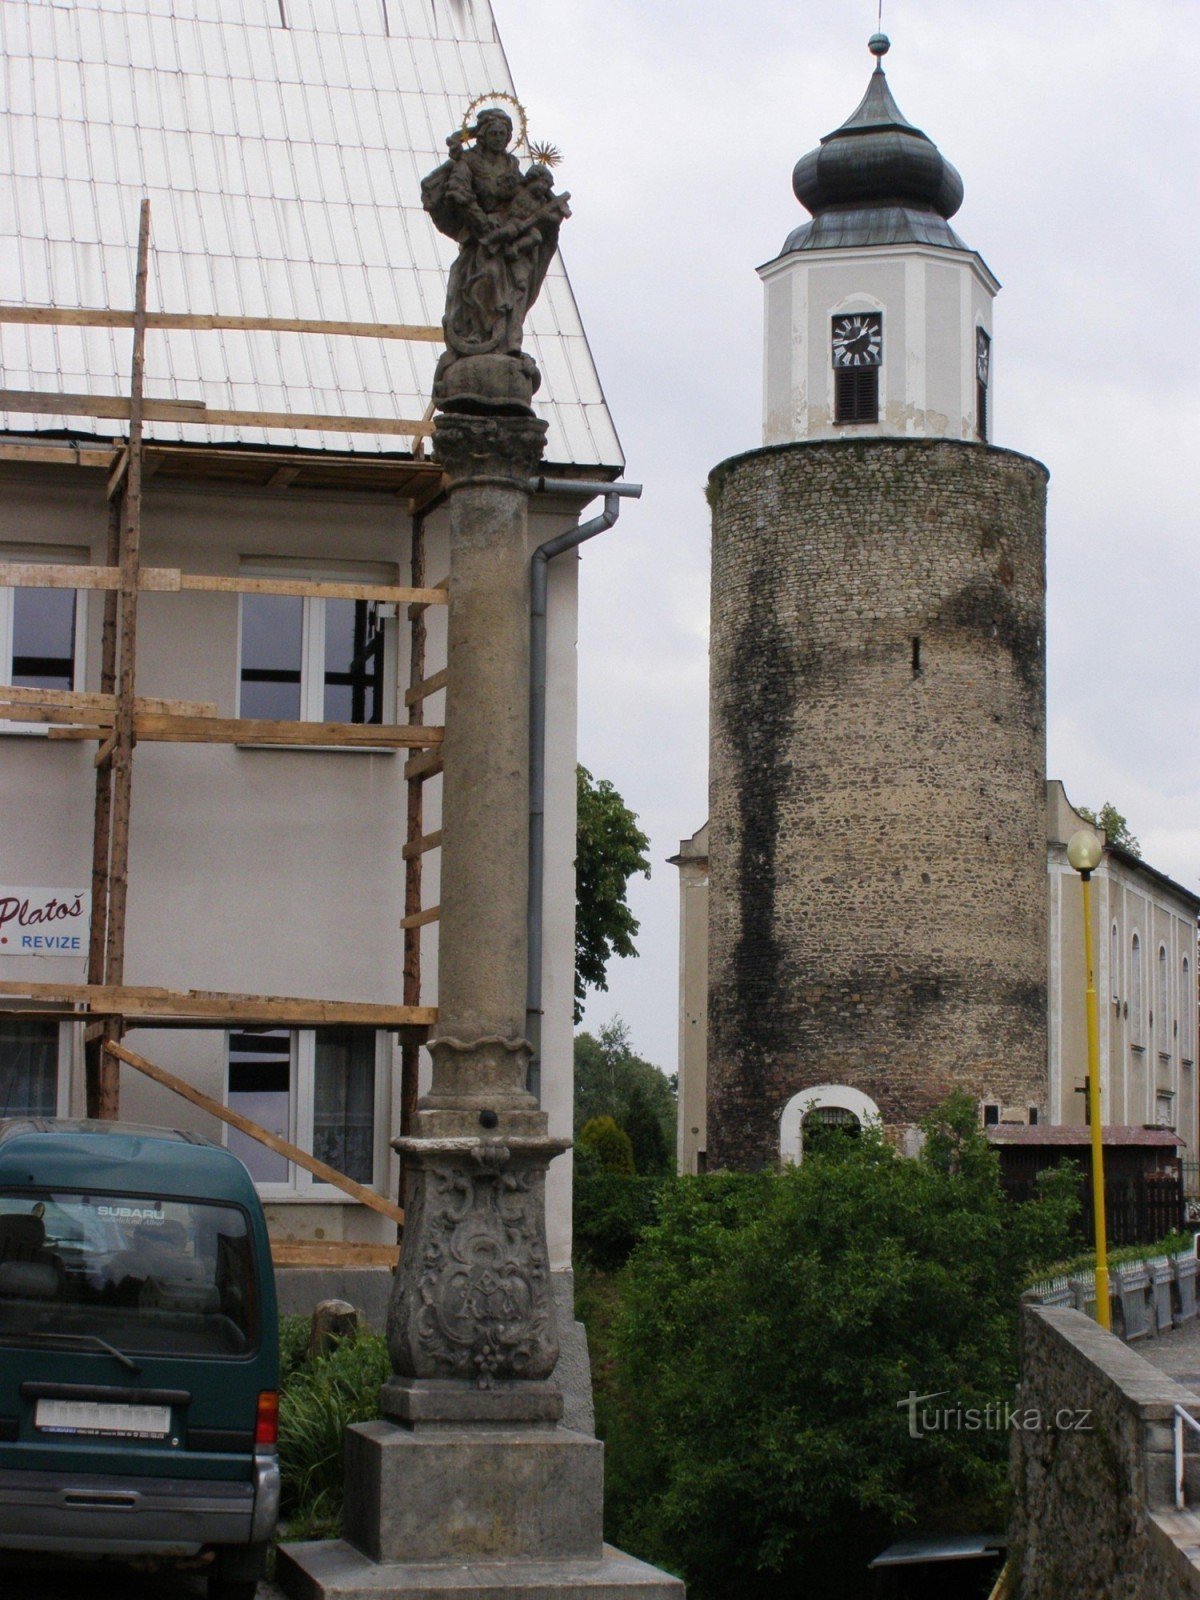 Žulová - a column with a statue of Our Lady